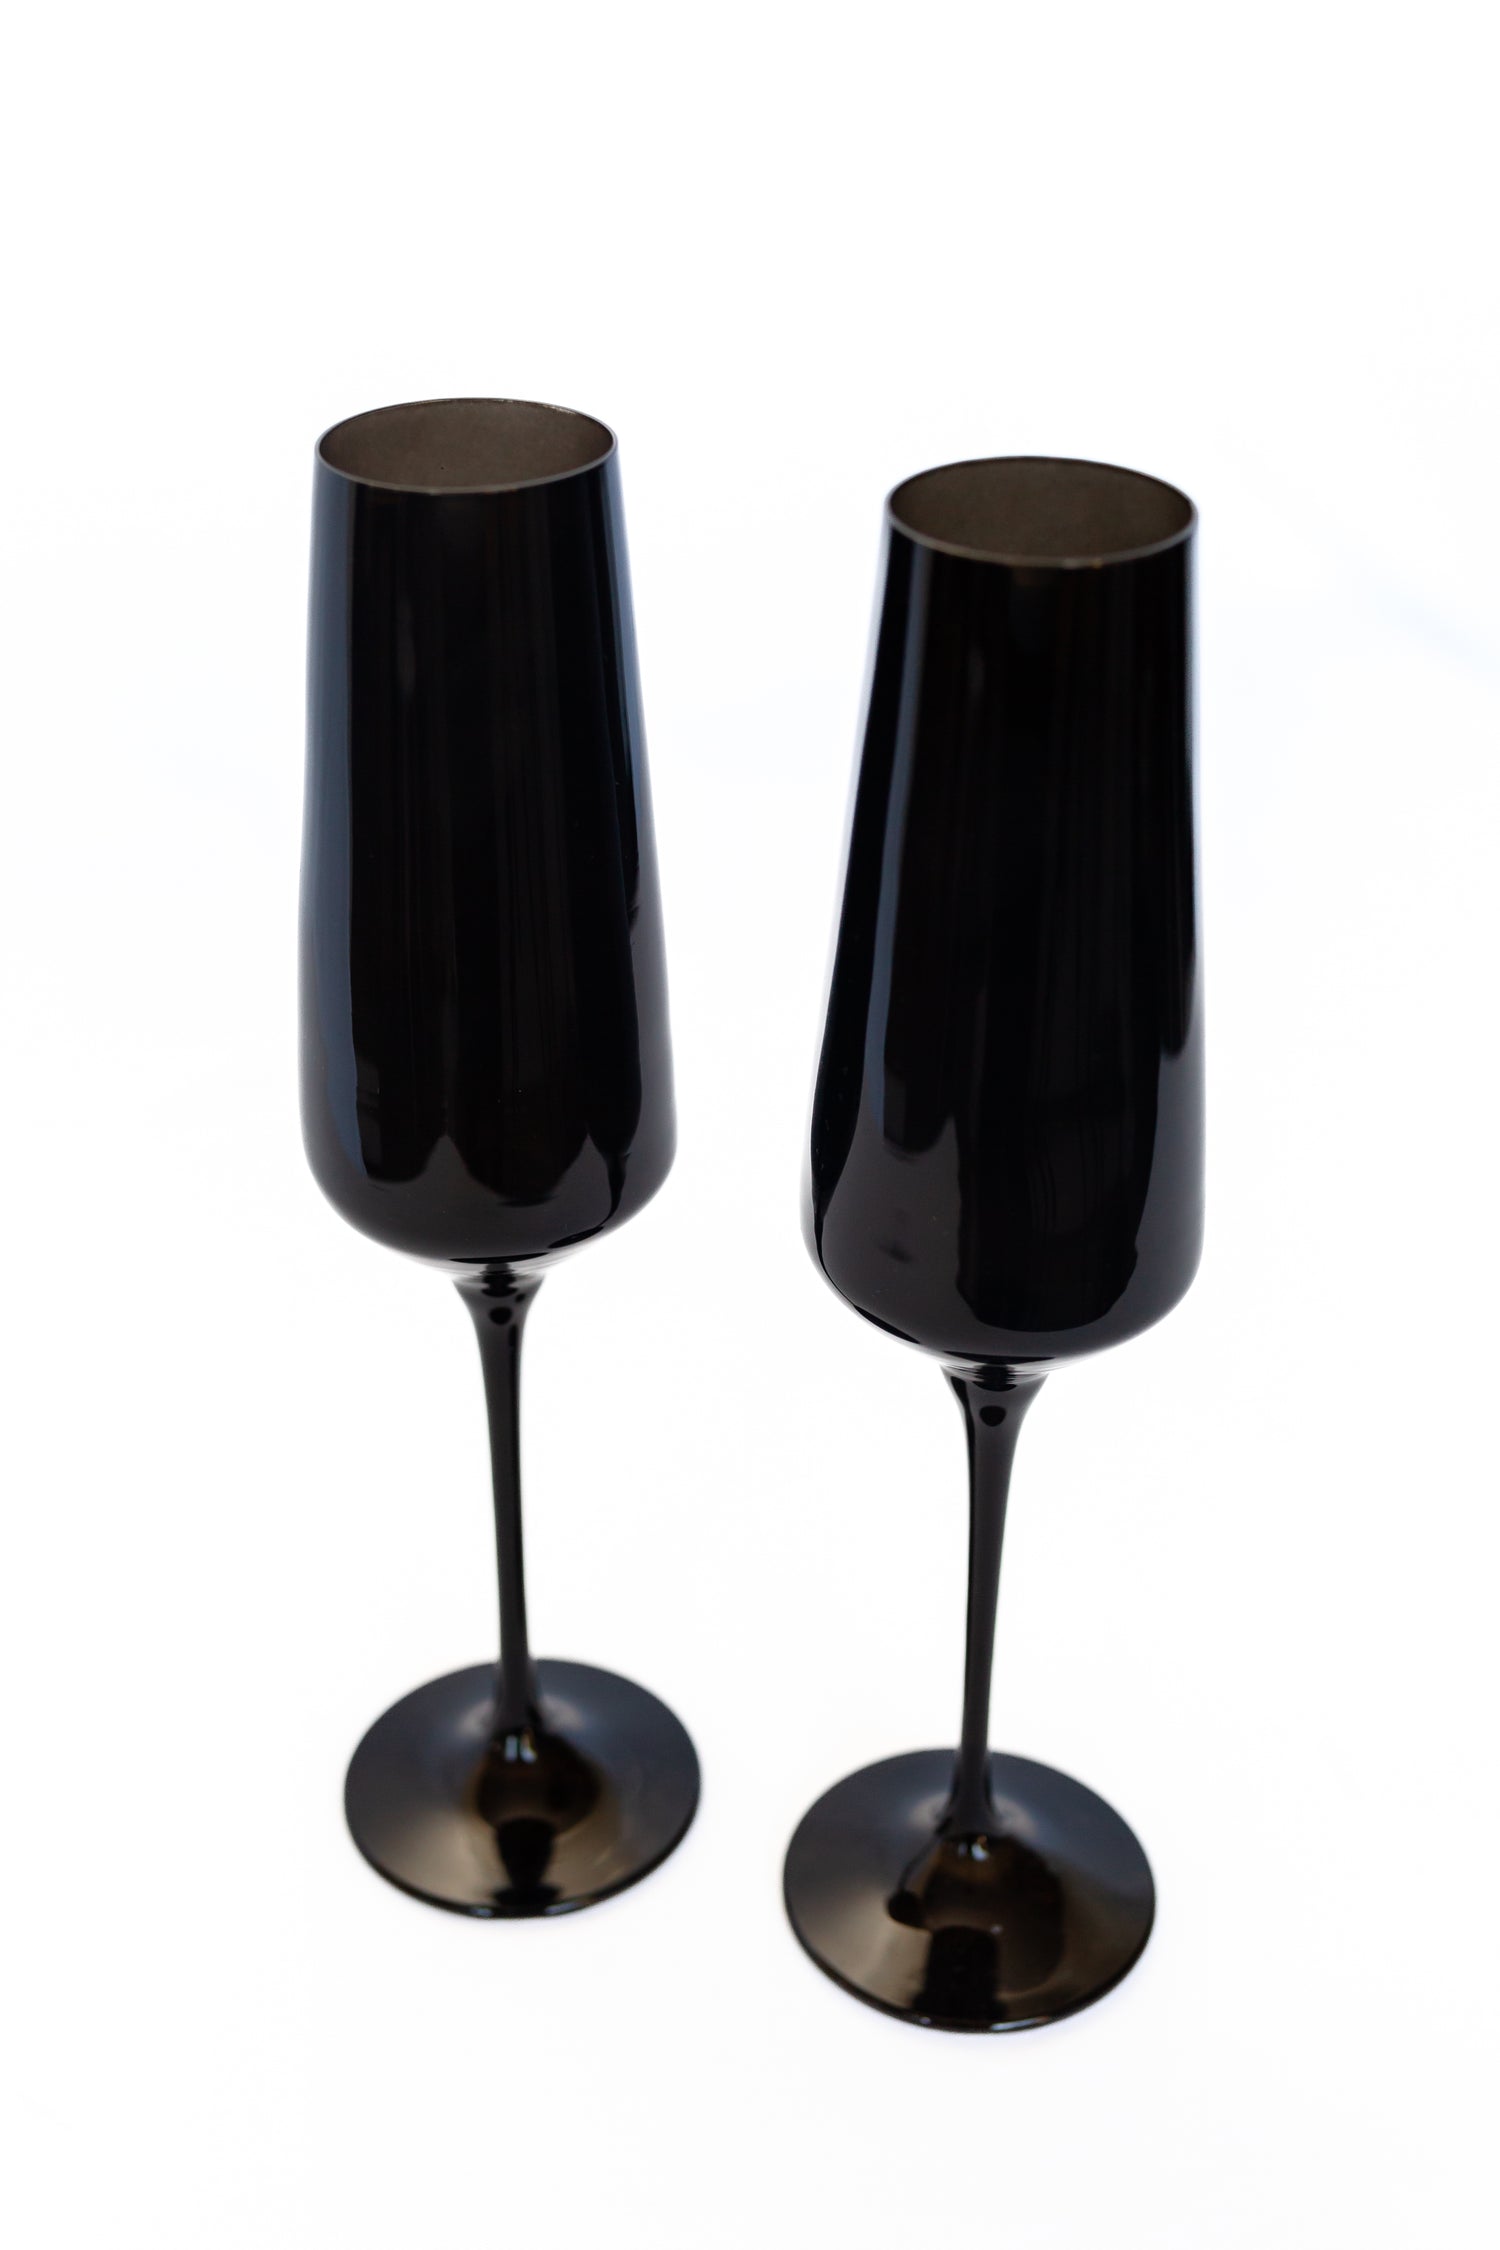 Estelle Colored Champagne Flute - Set of 2 {Black}